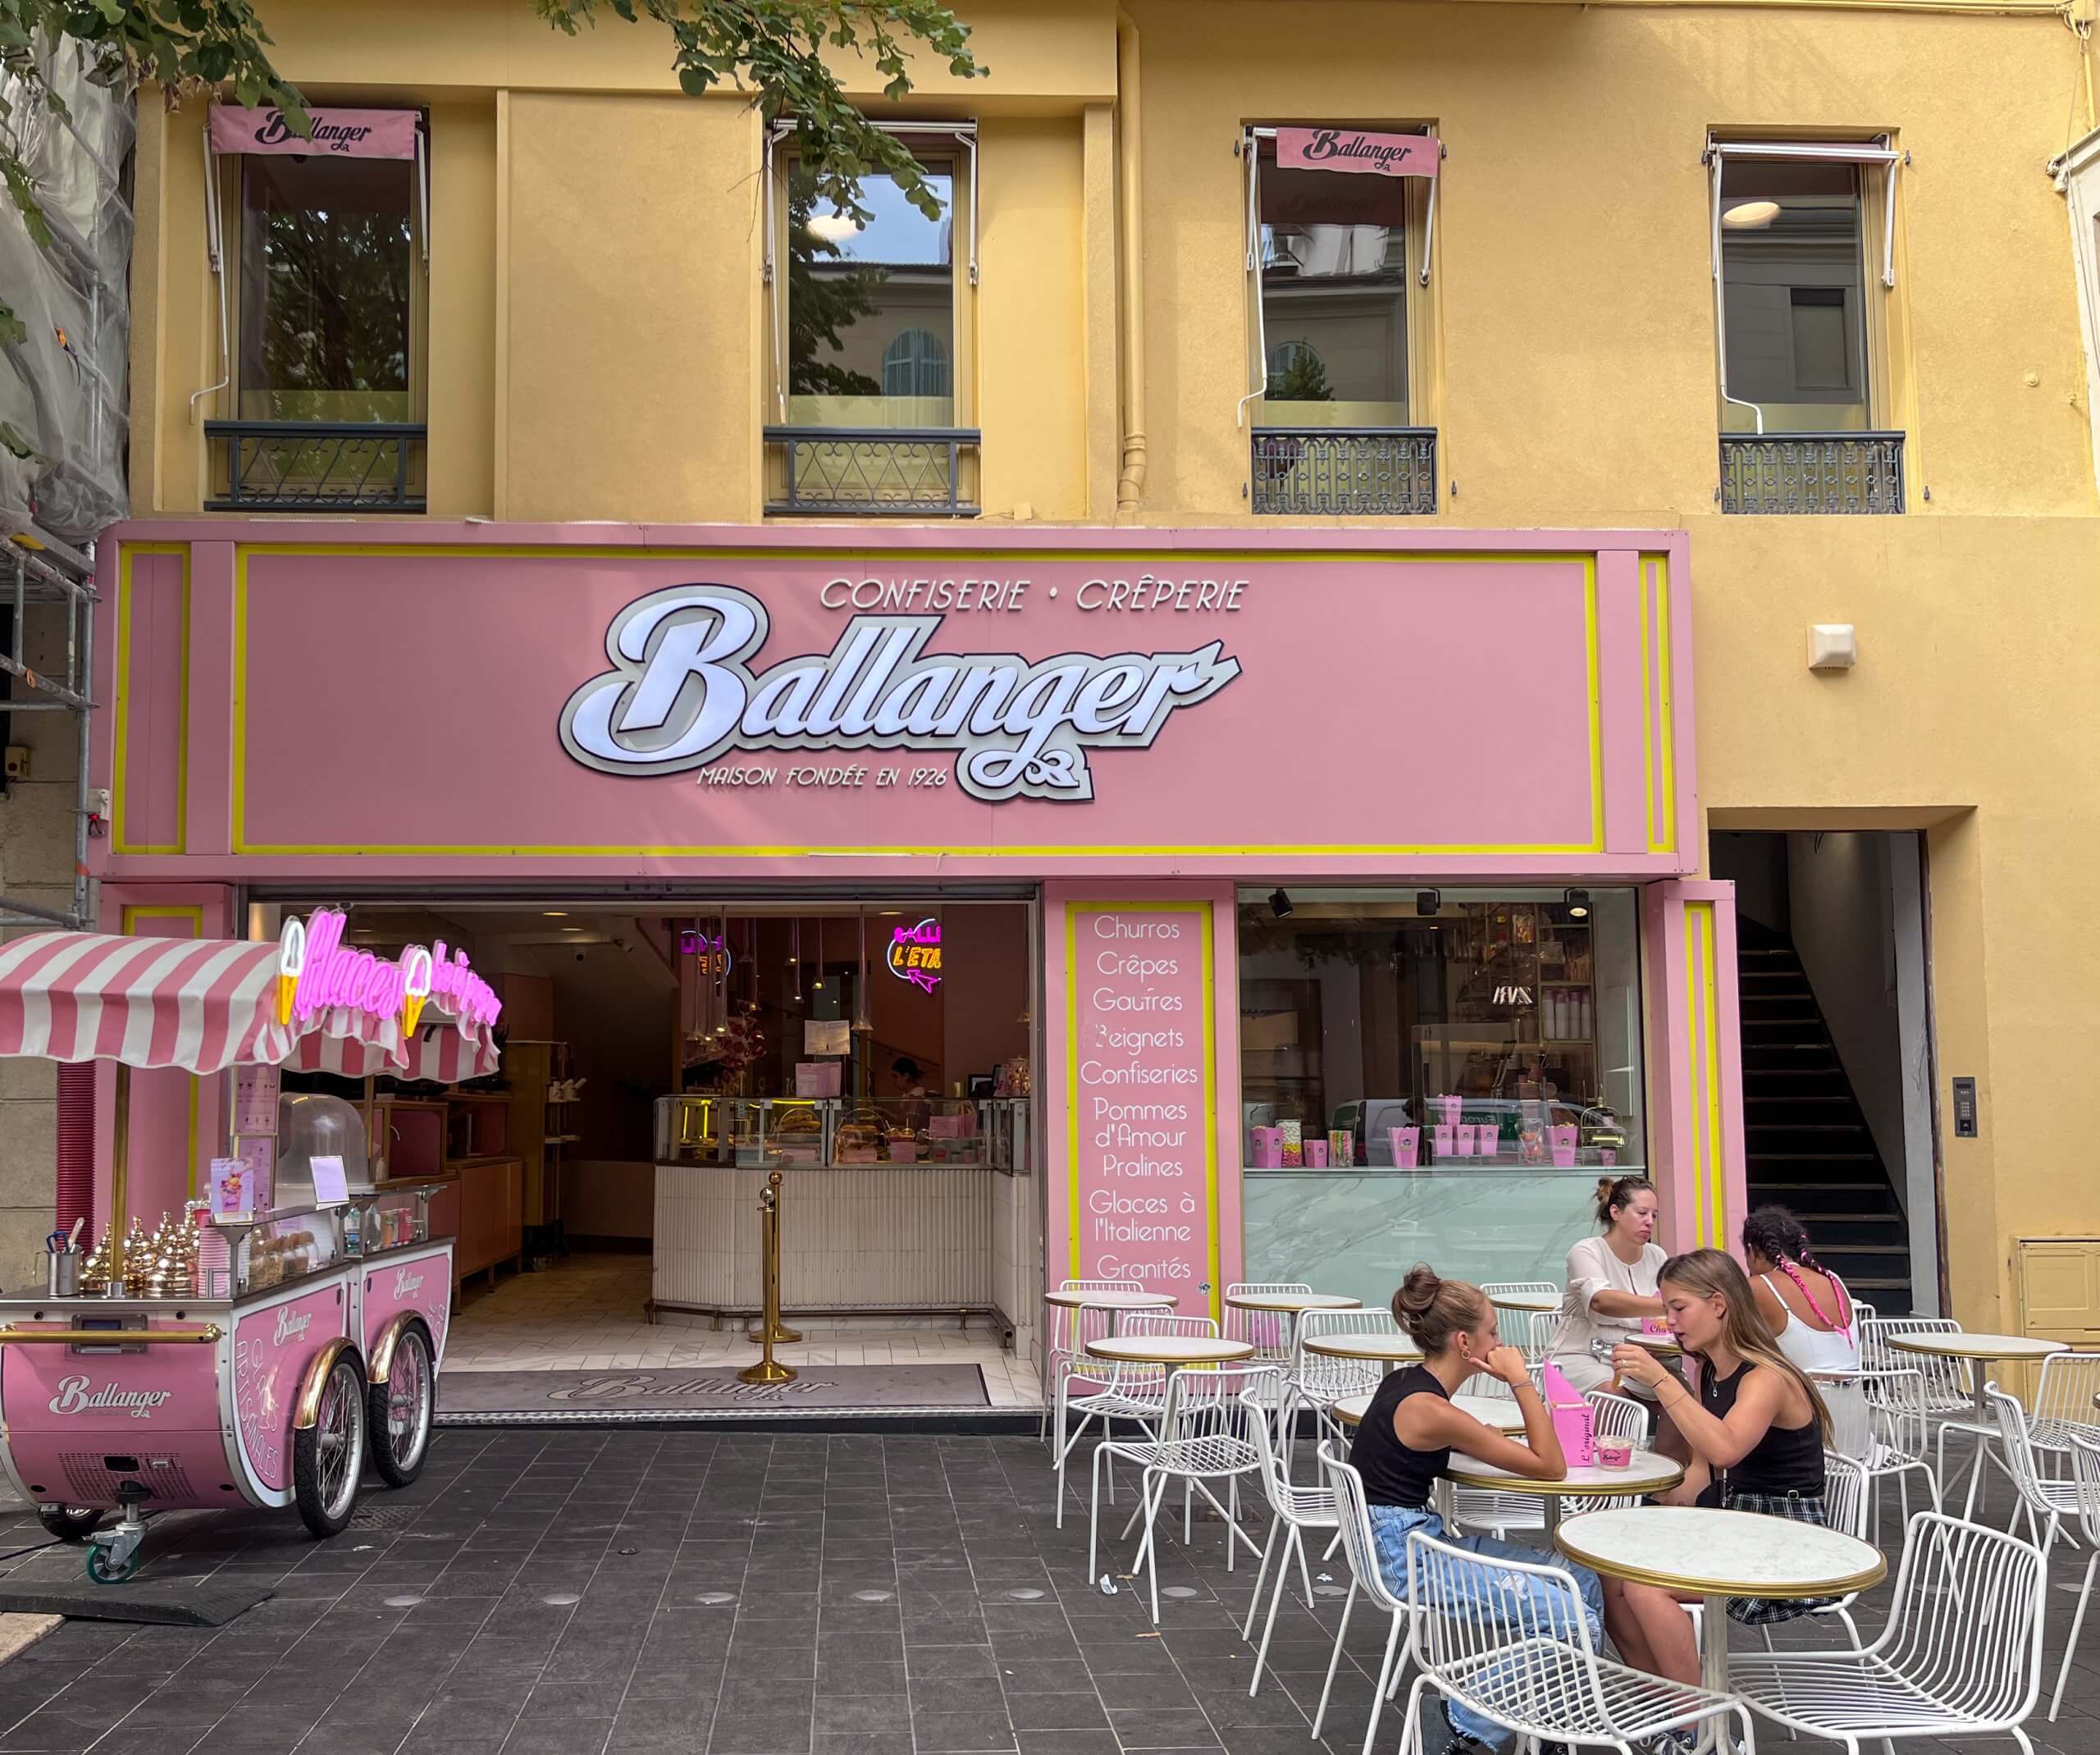 Nice Ballanger crepes restaurant